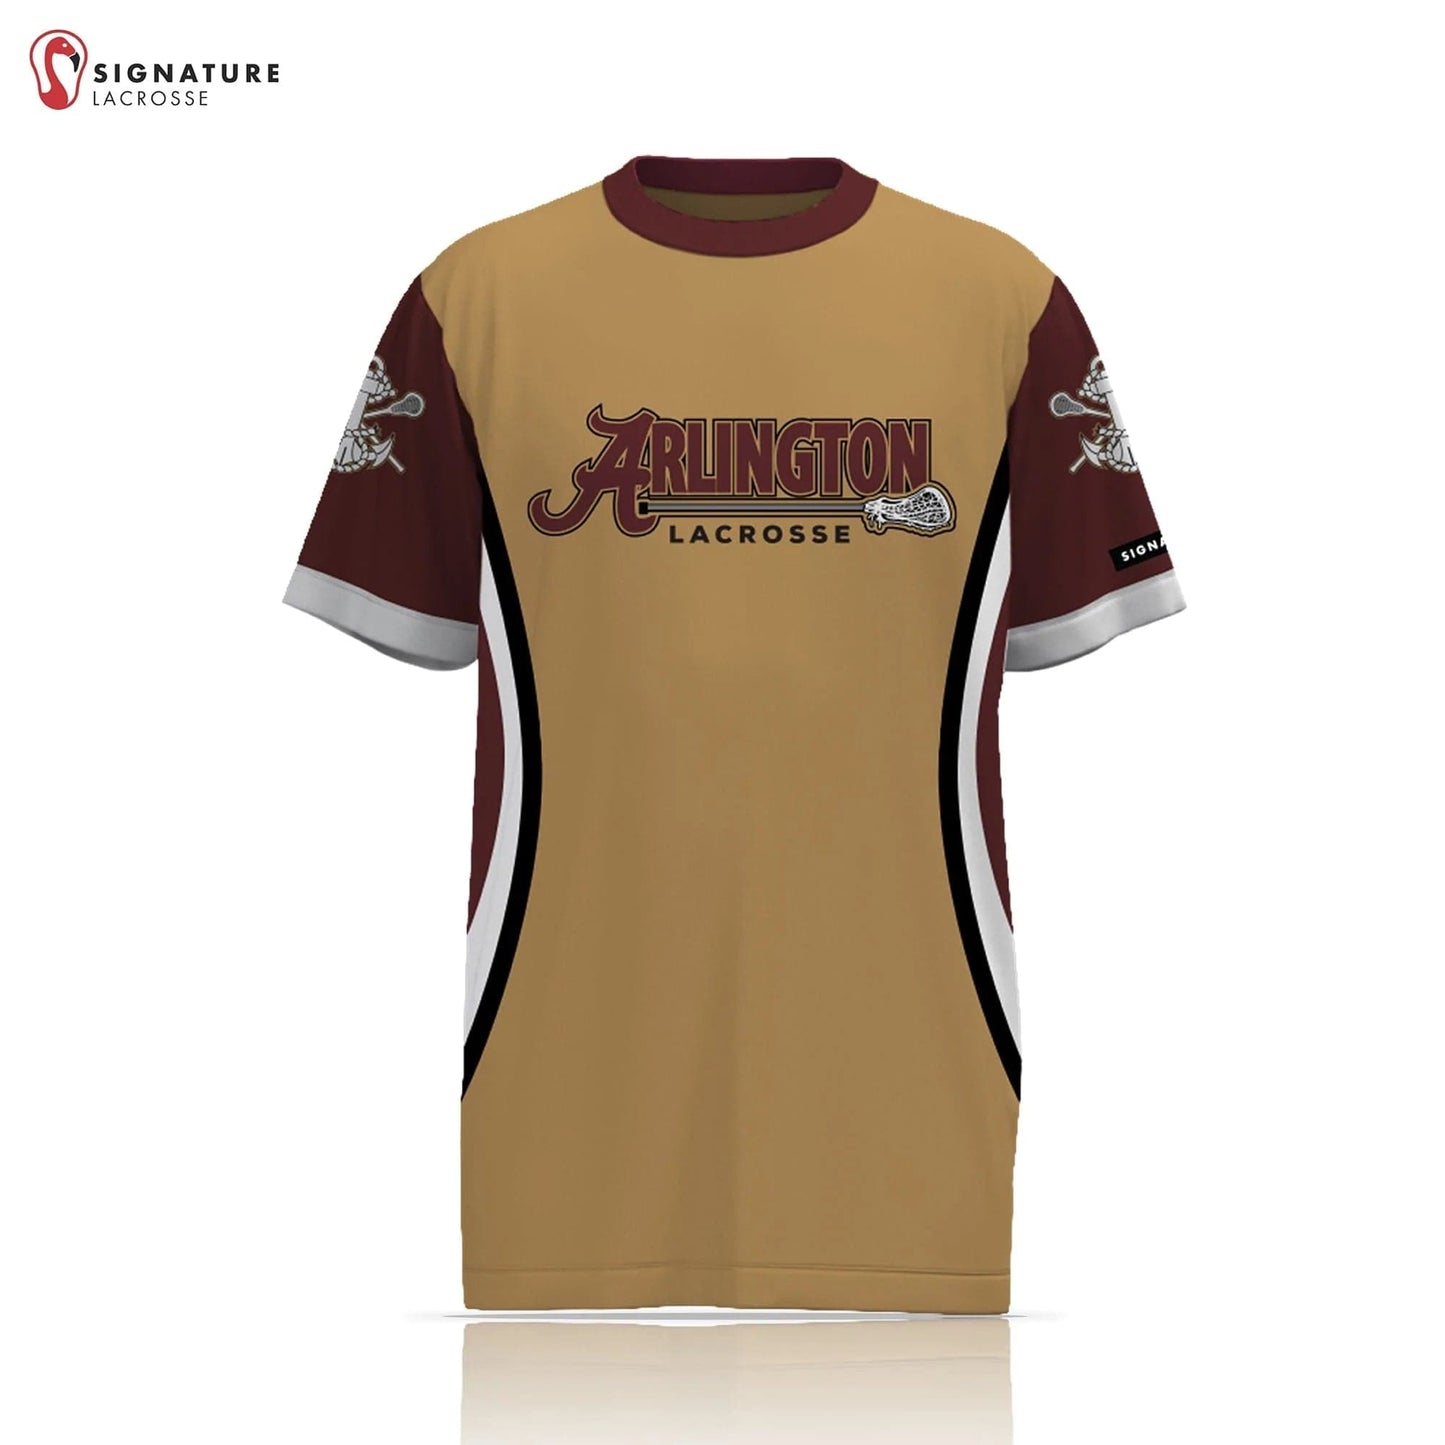 Arlington Lagrange Lacrosse Men's Short Sleeve Shooter Shirt: 1-2 Signature Lacrosse